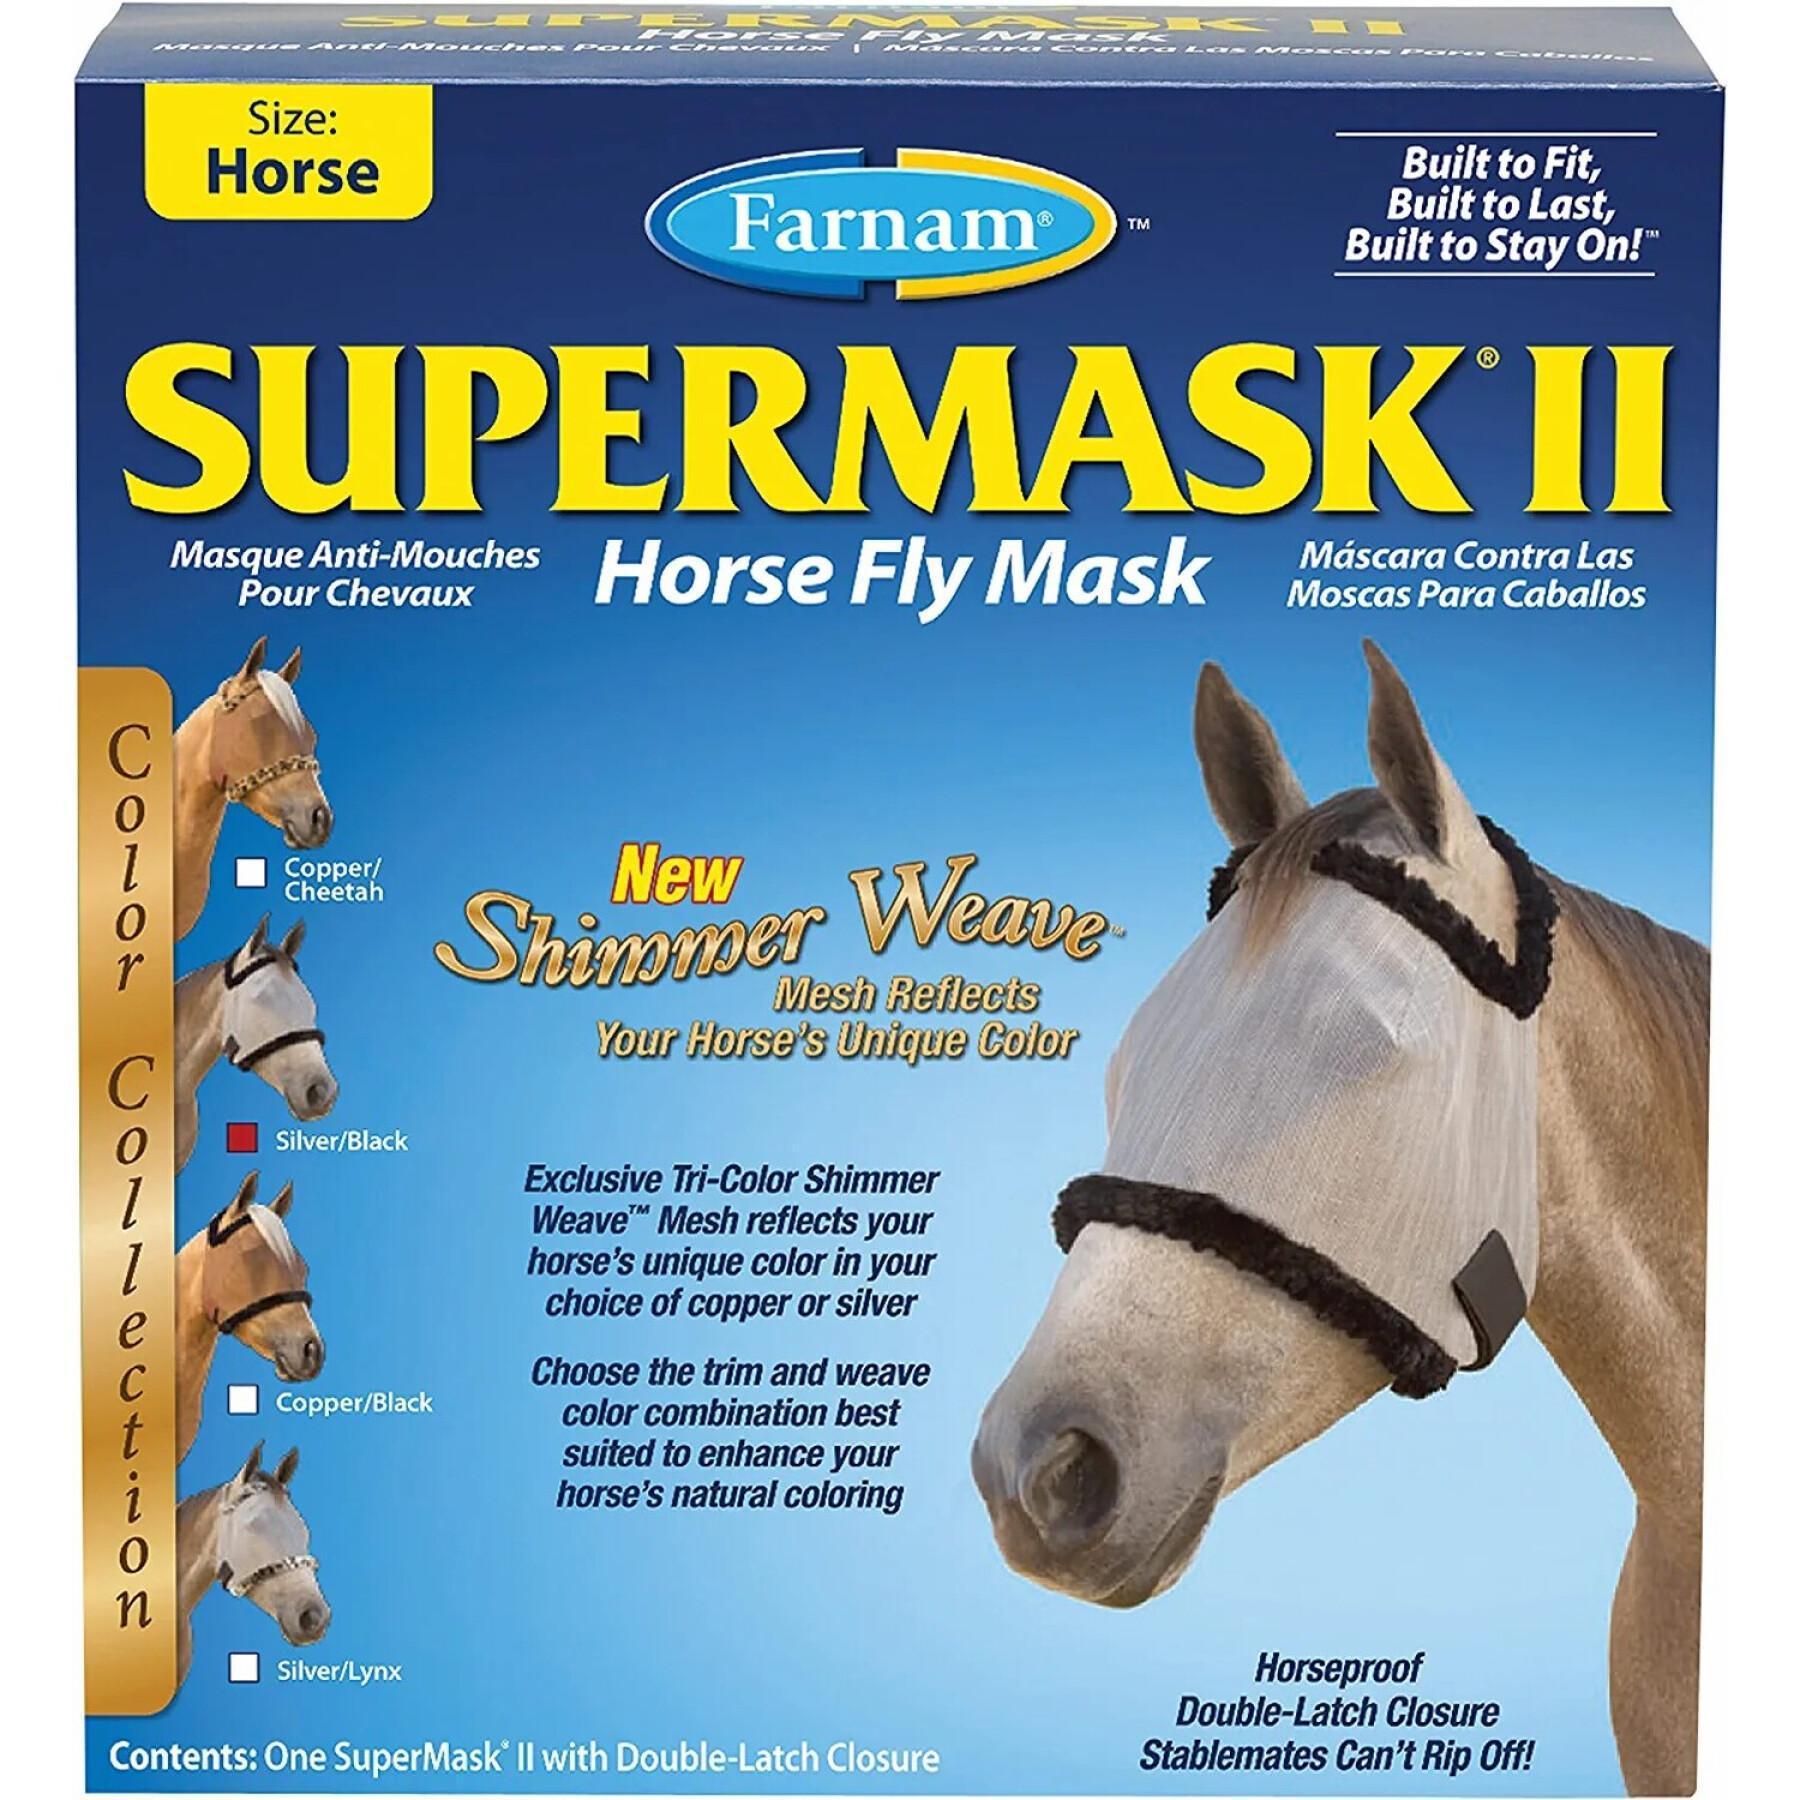 Masque anti-mouches pour cheval sans oreilles Farnam Supermask II Arab Classic arab